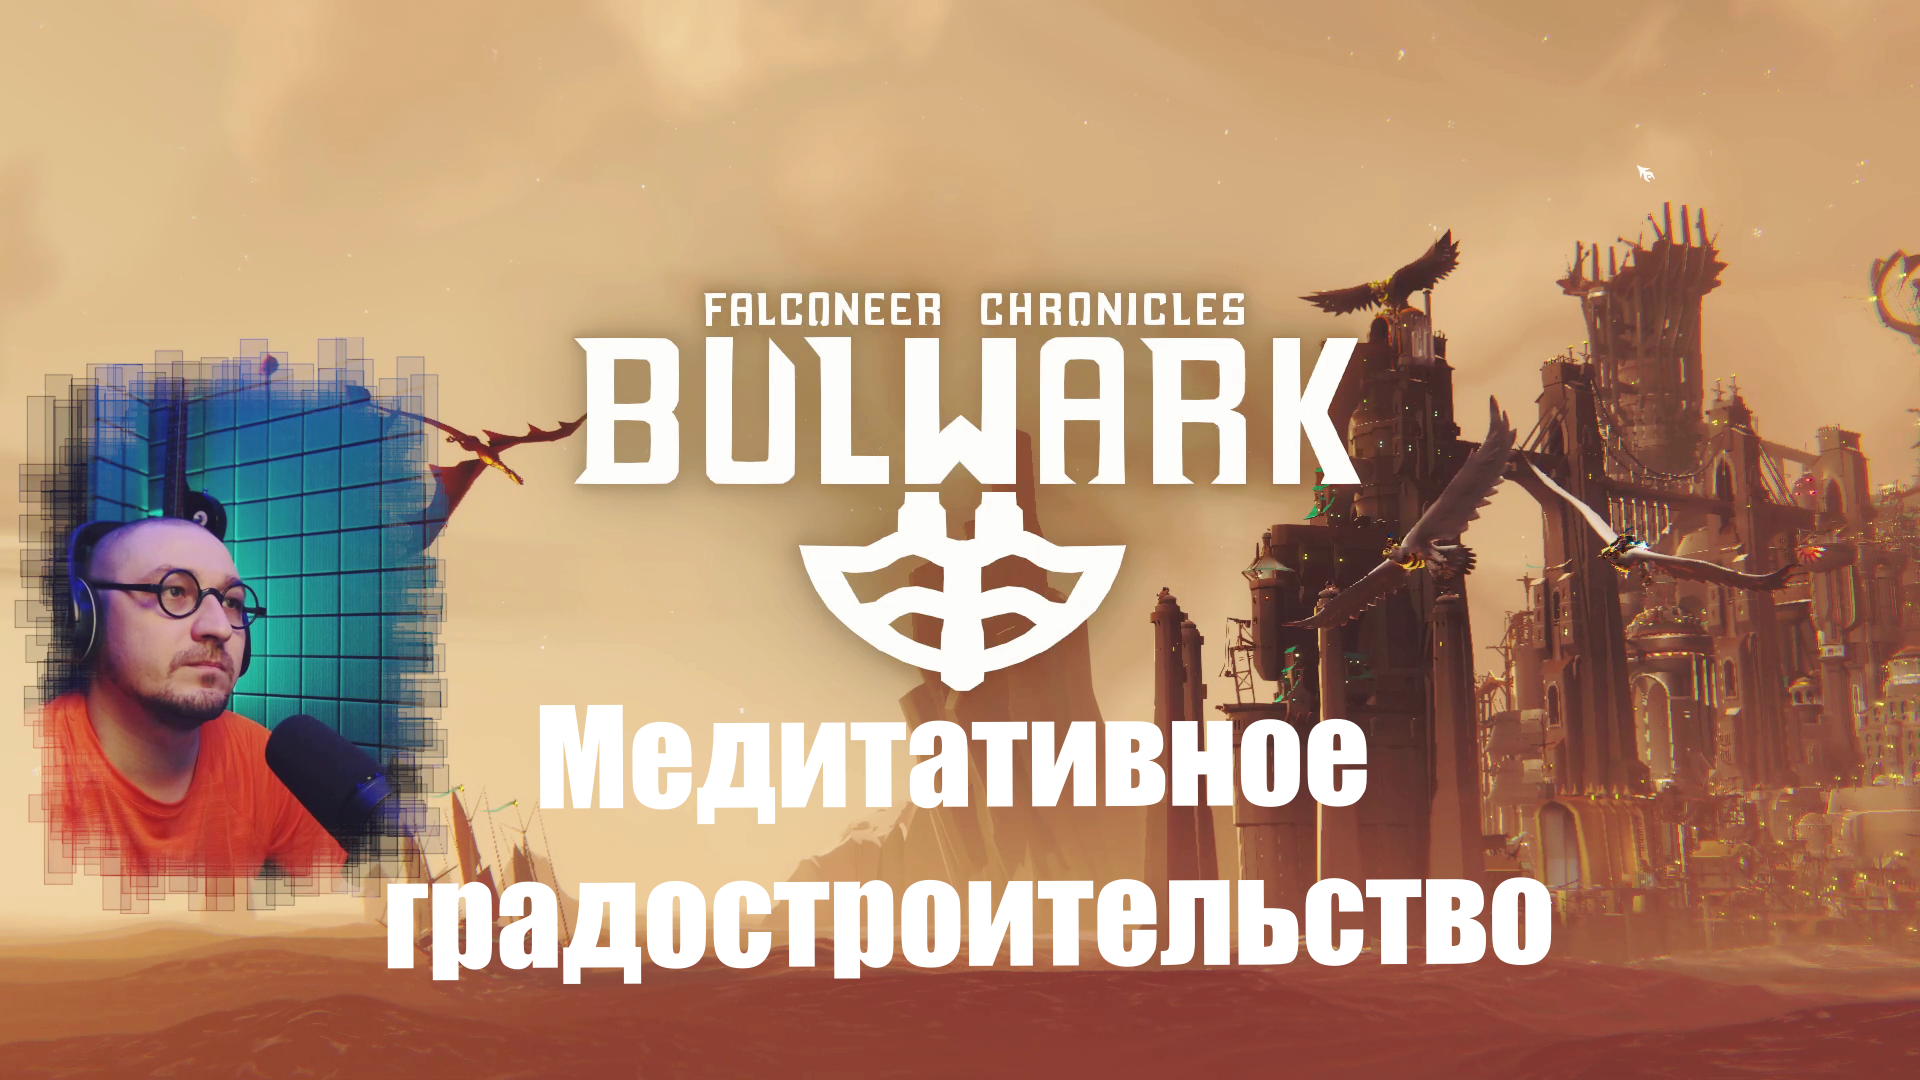 Bulwark: Falconeer Chronicles - Медитативное градостроительство